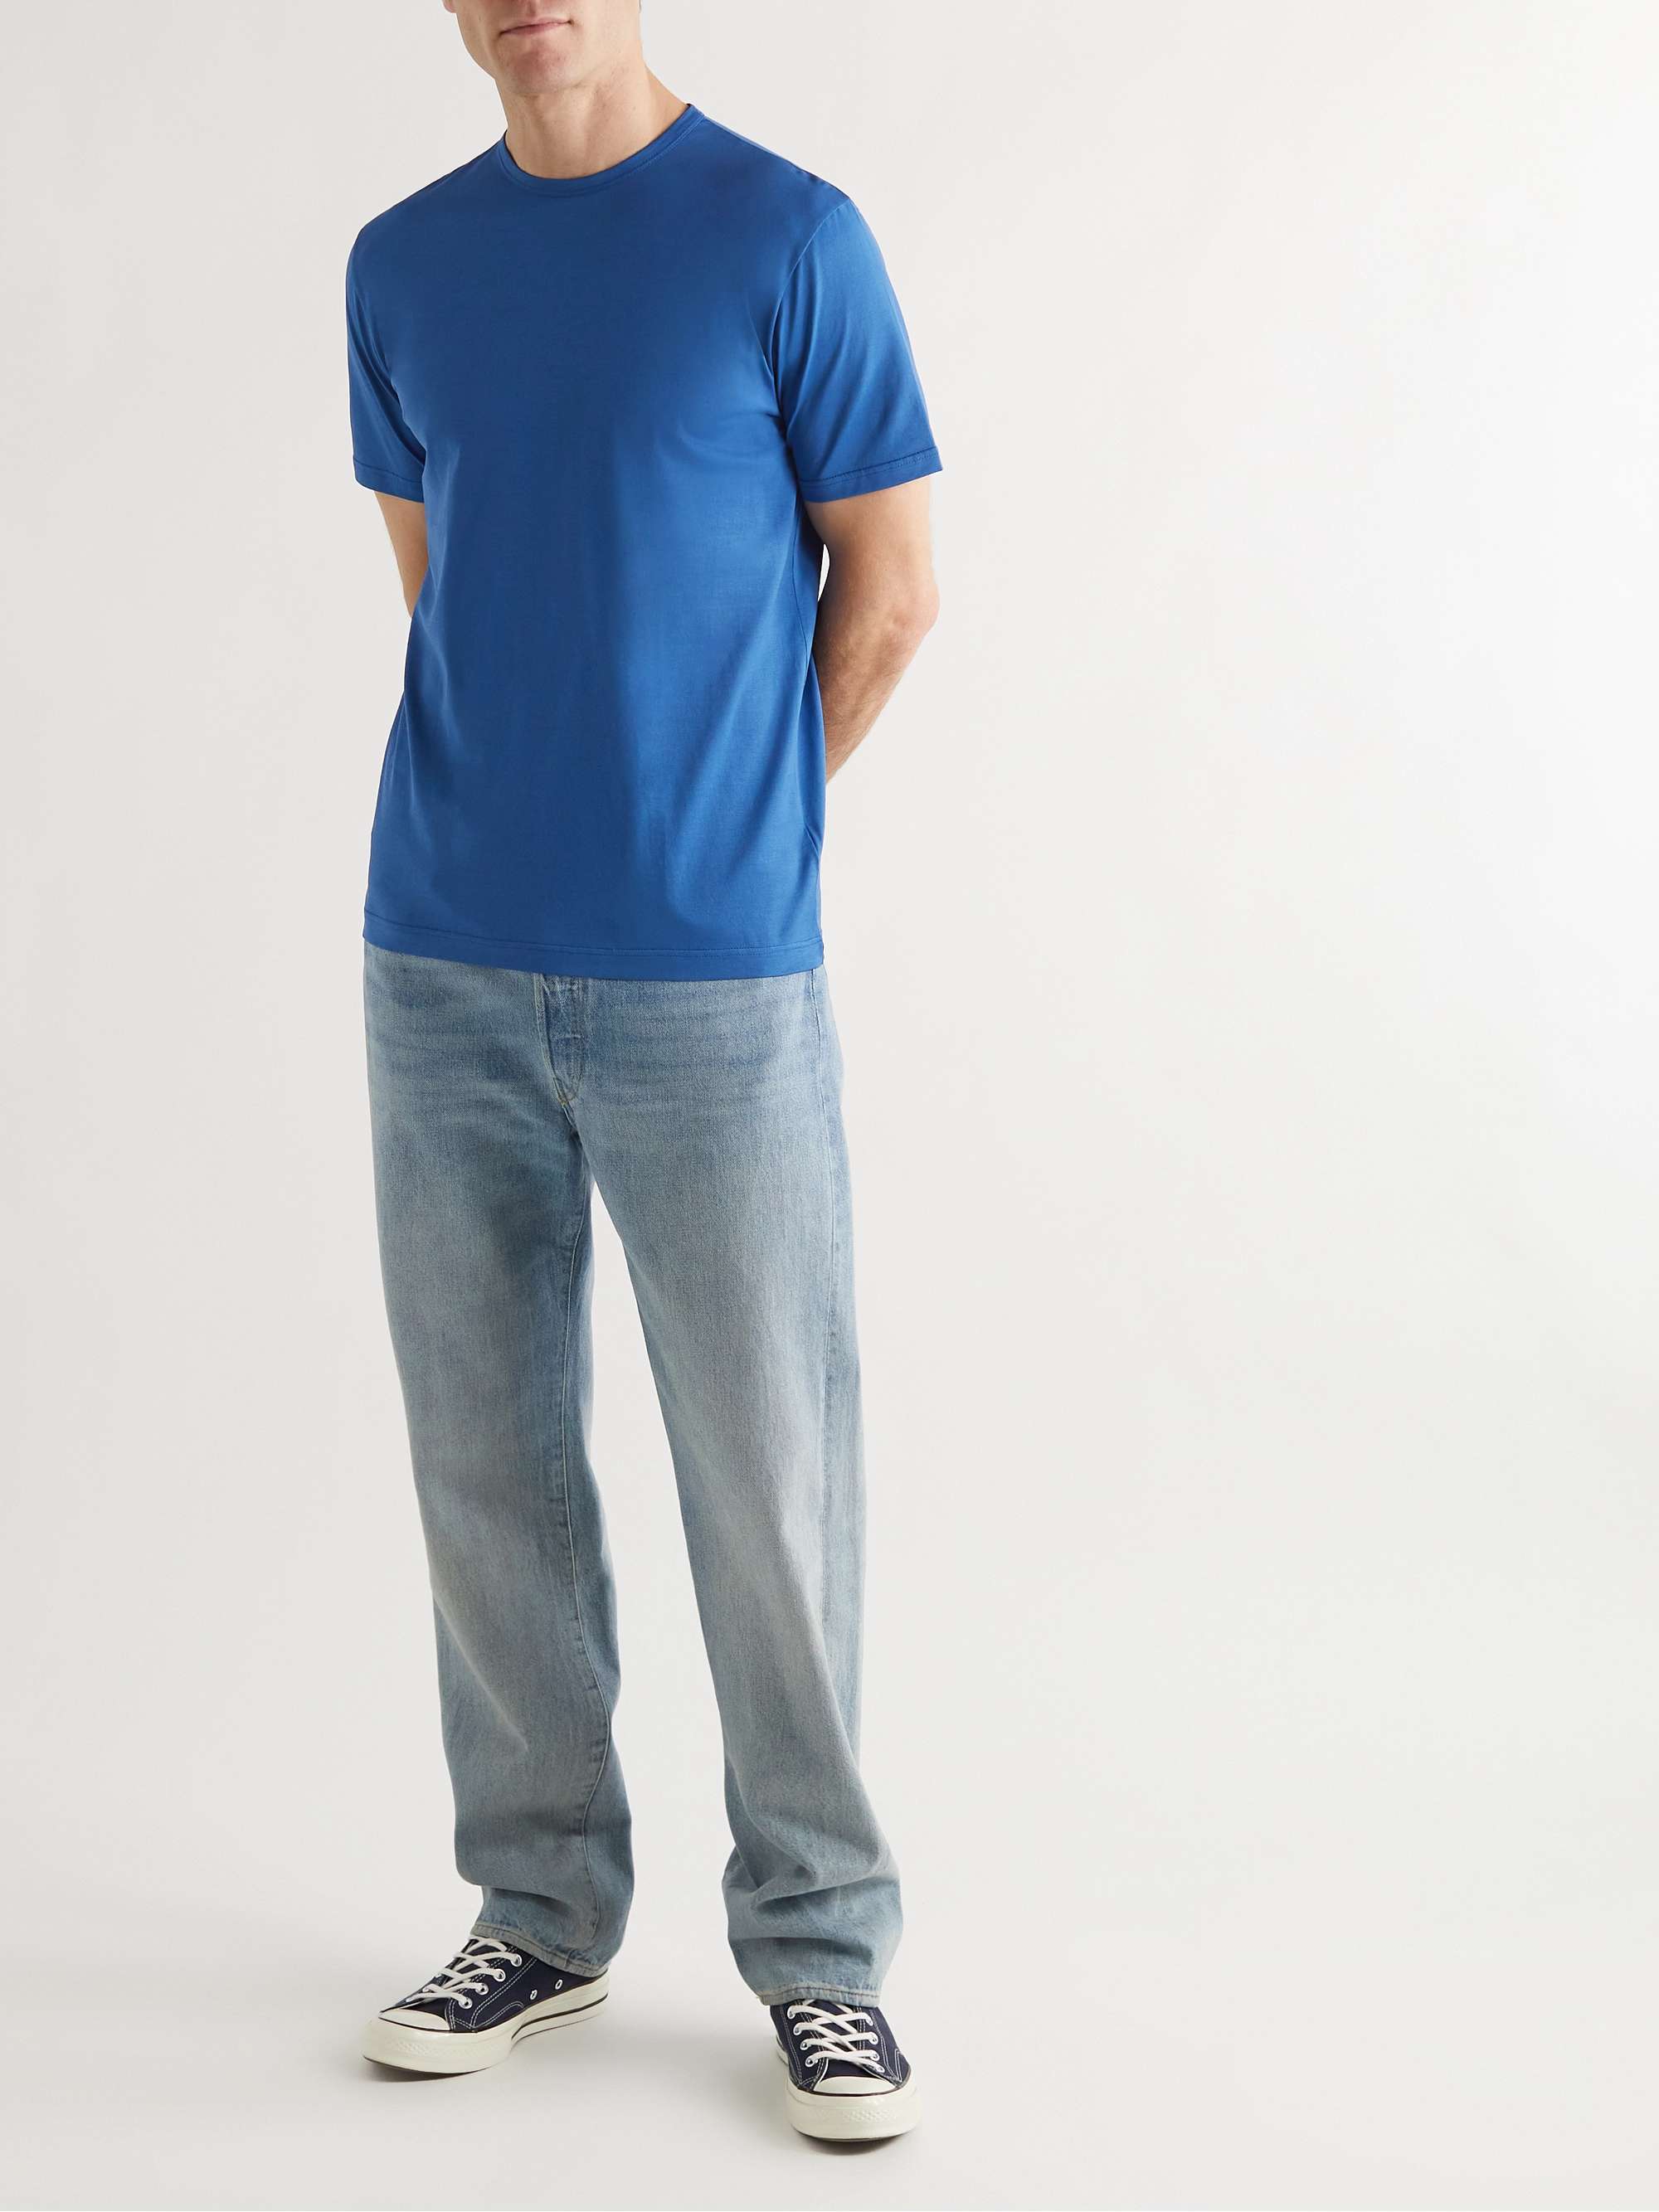 SUNSPEL Slim-Fit Cotton-Jersey T-Shirt